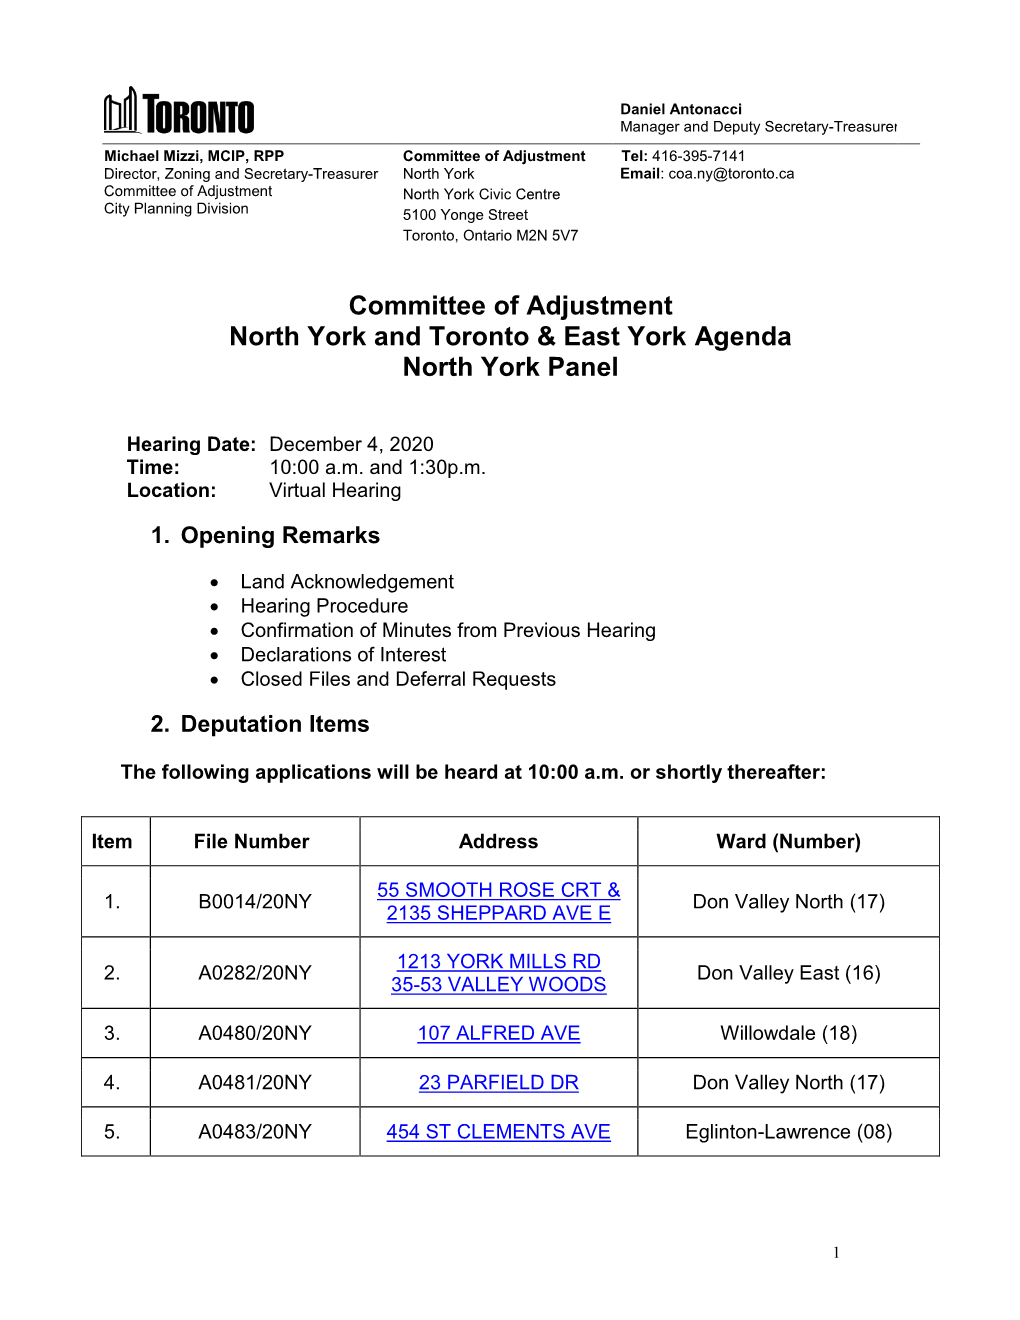 Committee of Adjustment North York, Hearing Agenda, December 4, 2020